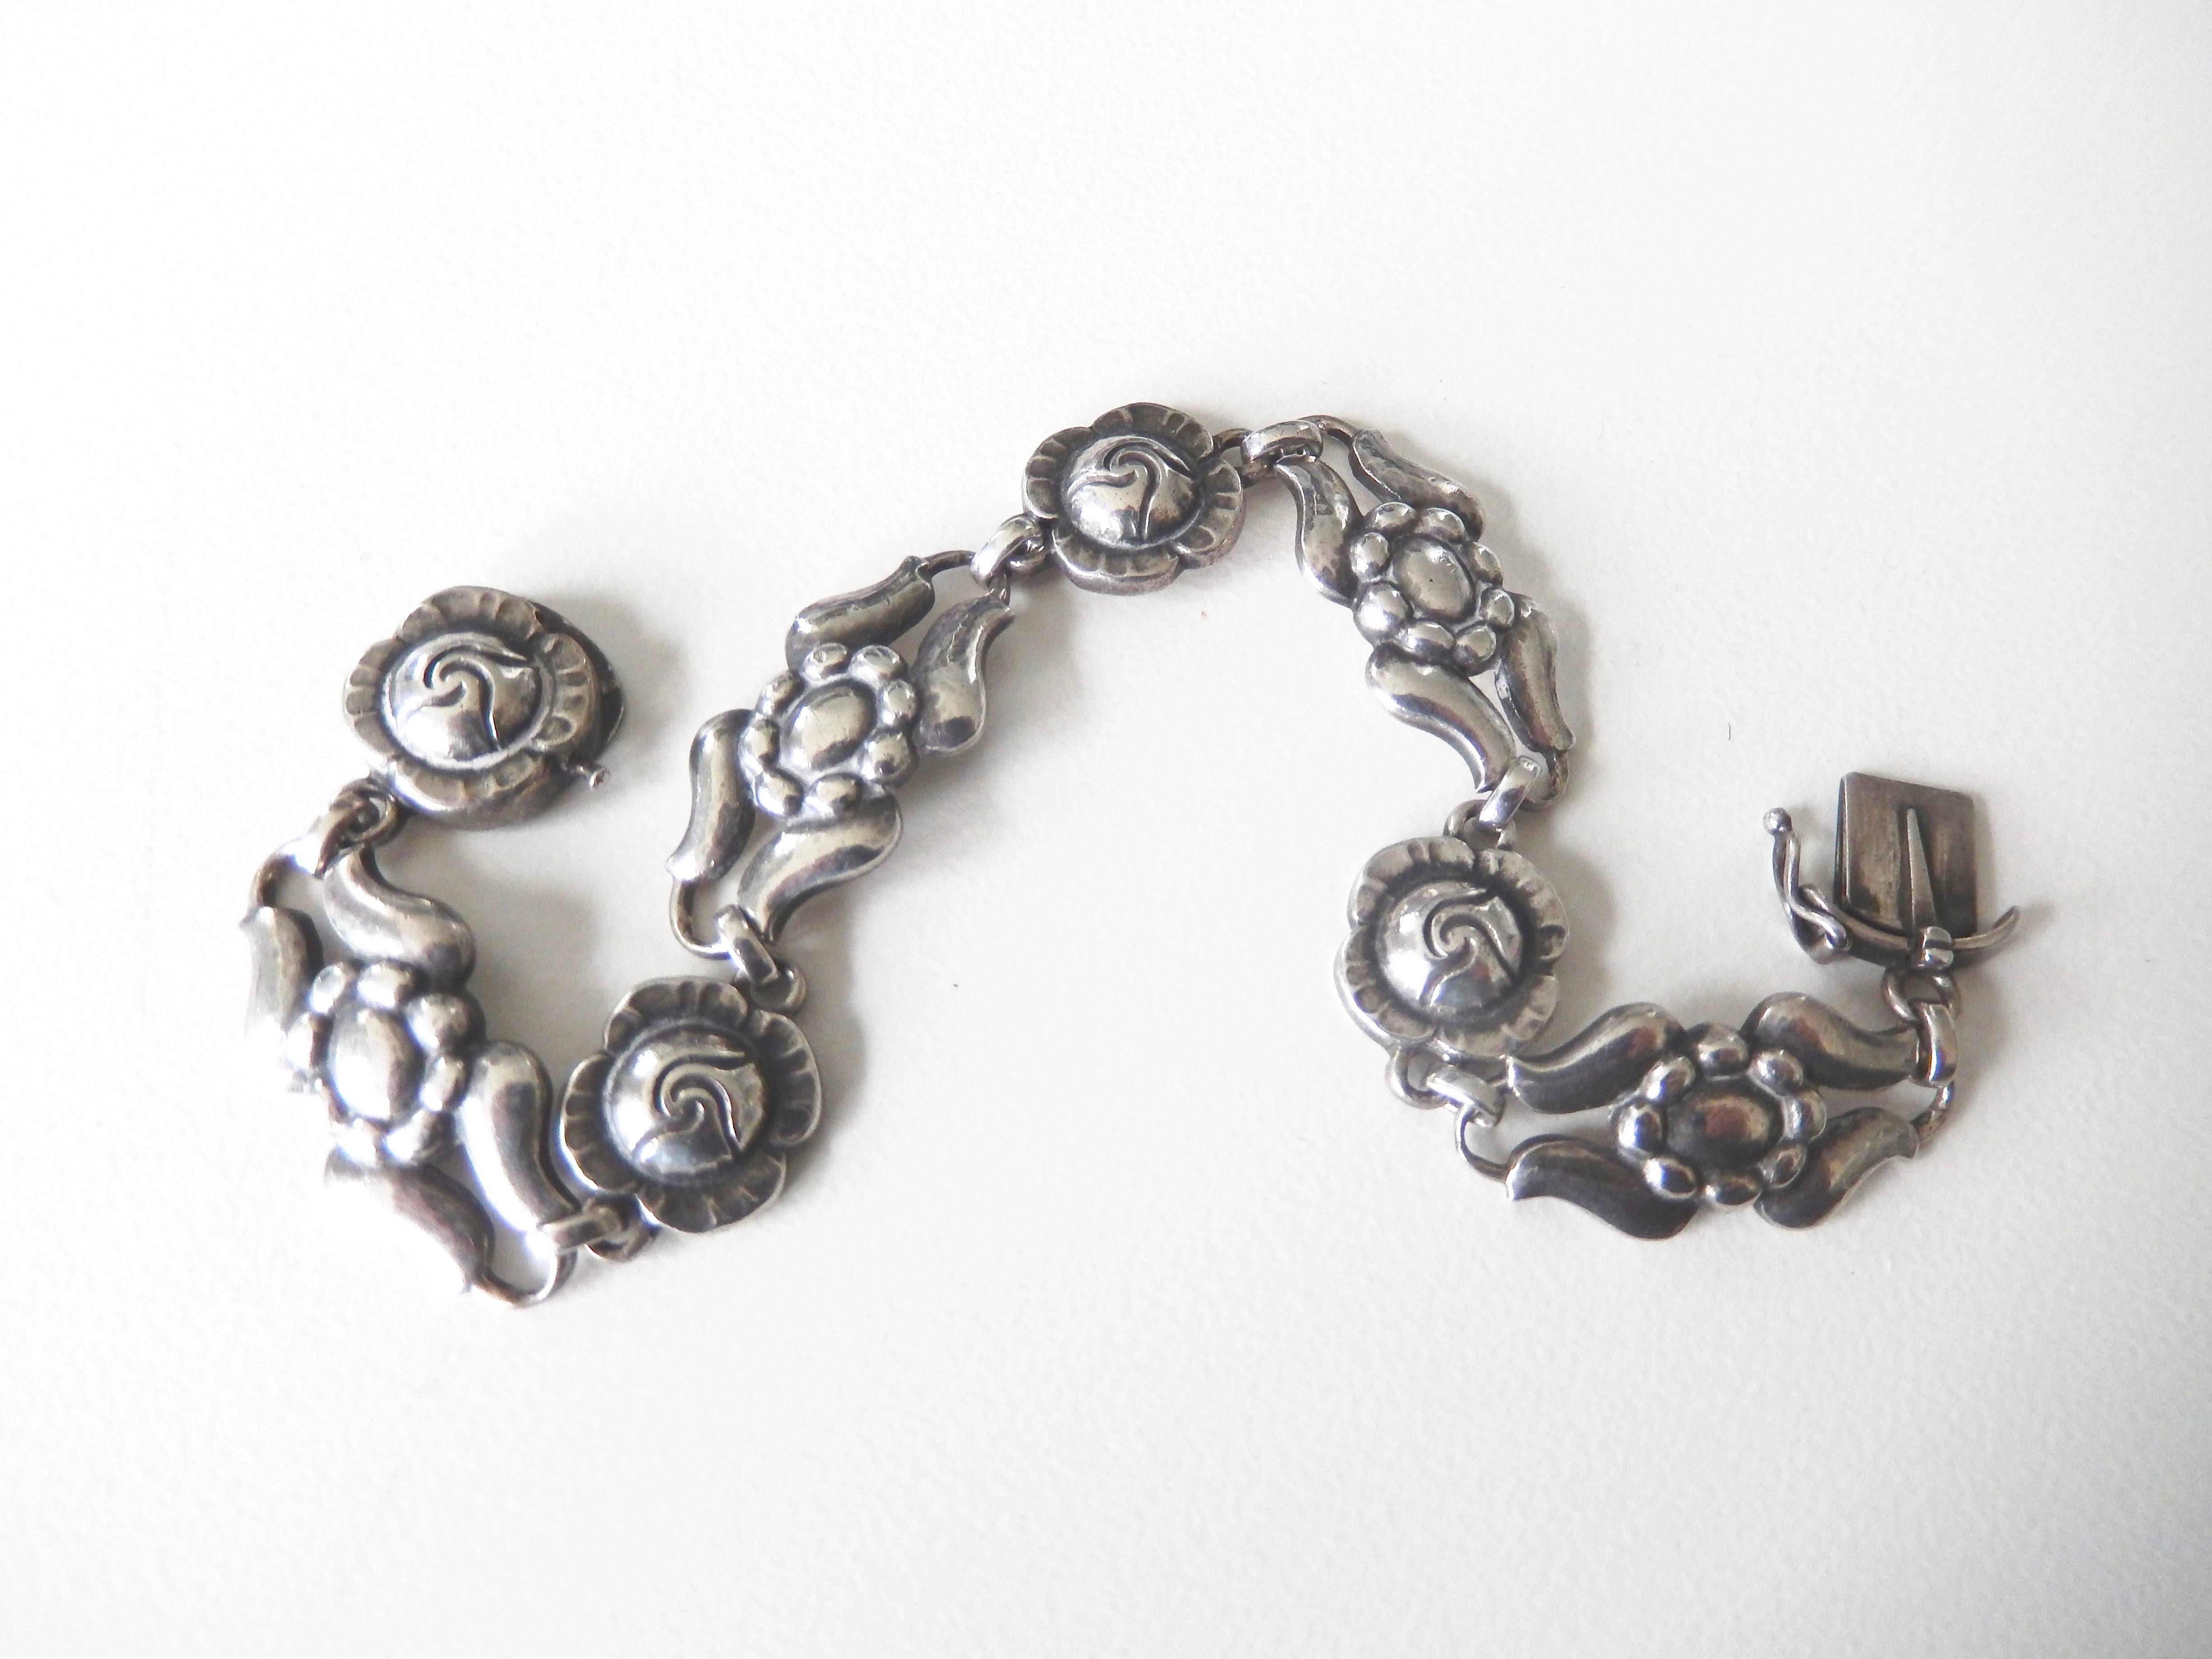 Vintage sterling silver link bracelet by Georg Jensen with stylized rose design.
An intricate, organic design motif.

Reference:  Georg Jensen by Janet Drucker, p. 117.